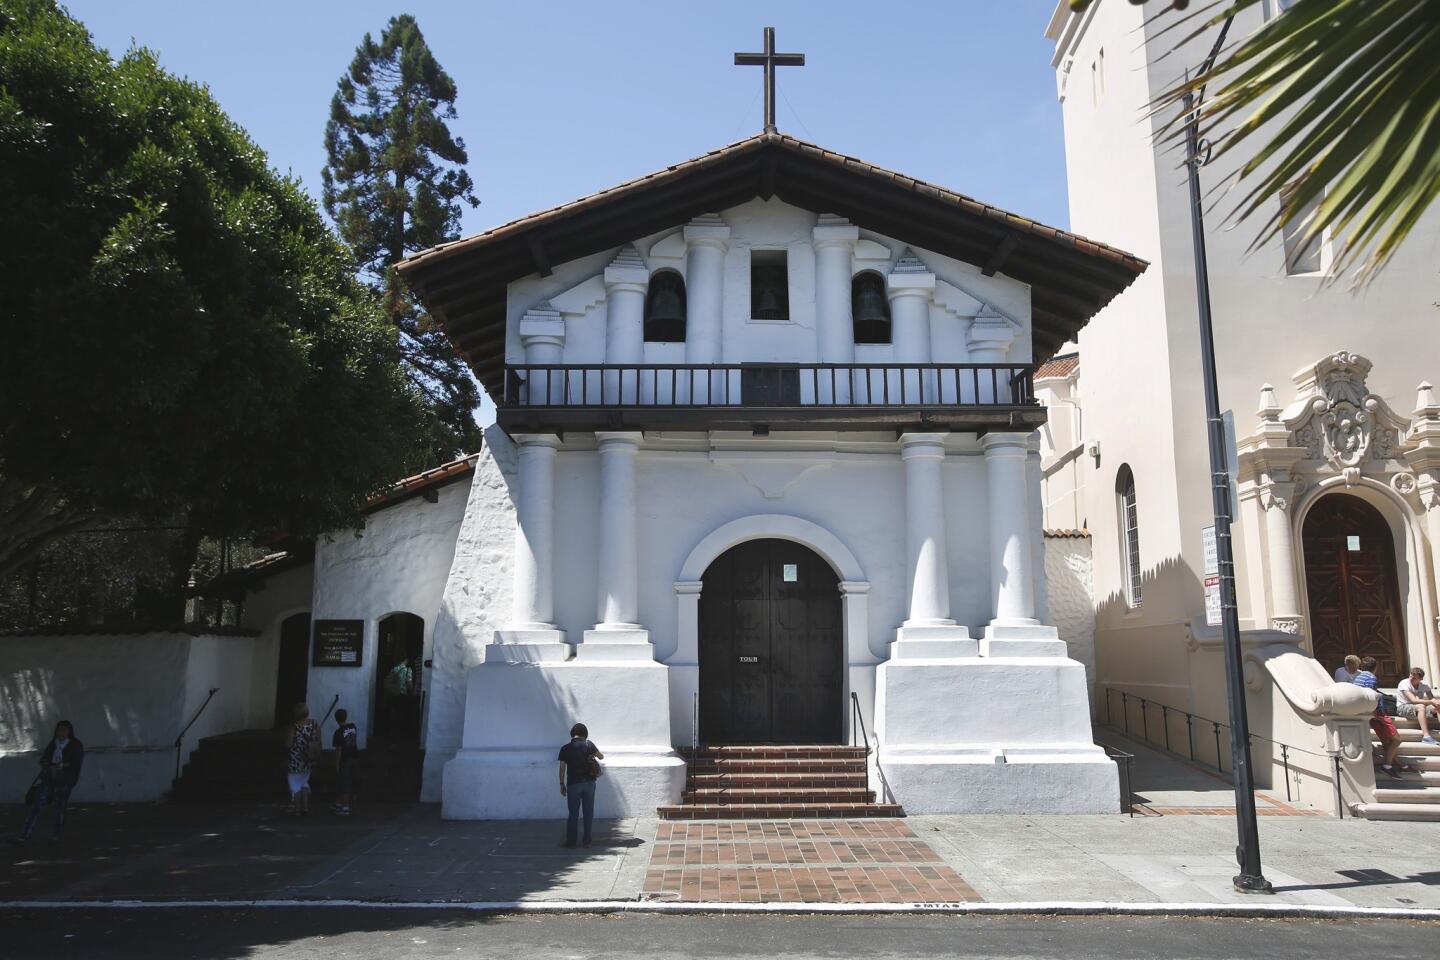 Mission San Francisco de Asís, often called Mission Dolores, was founded June 29, 1776.